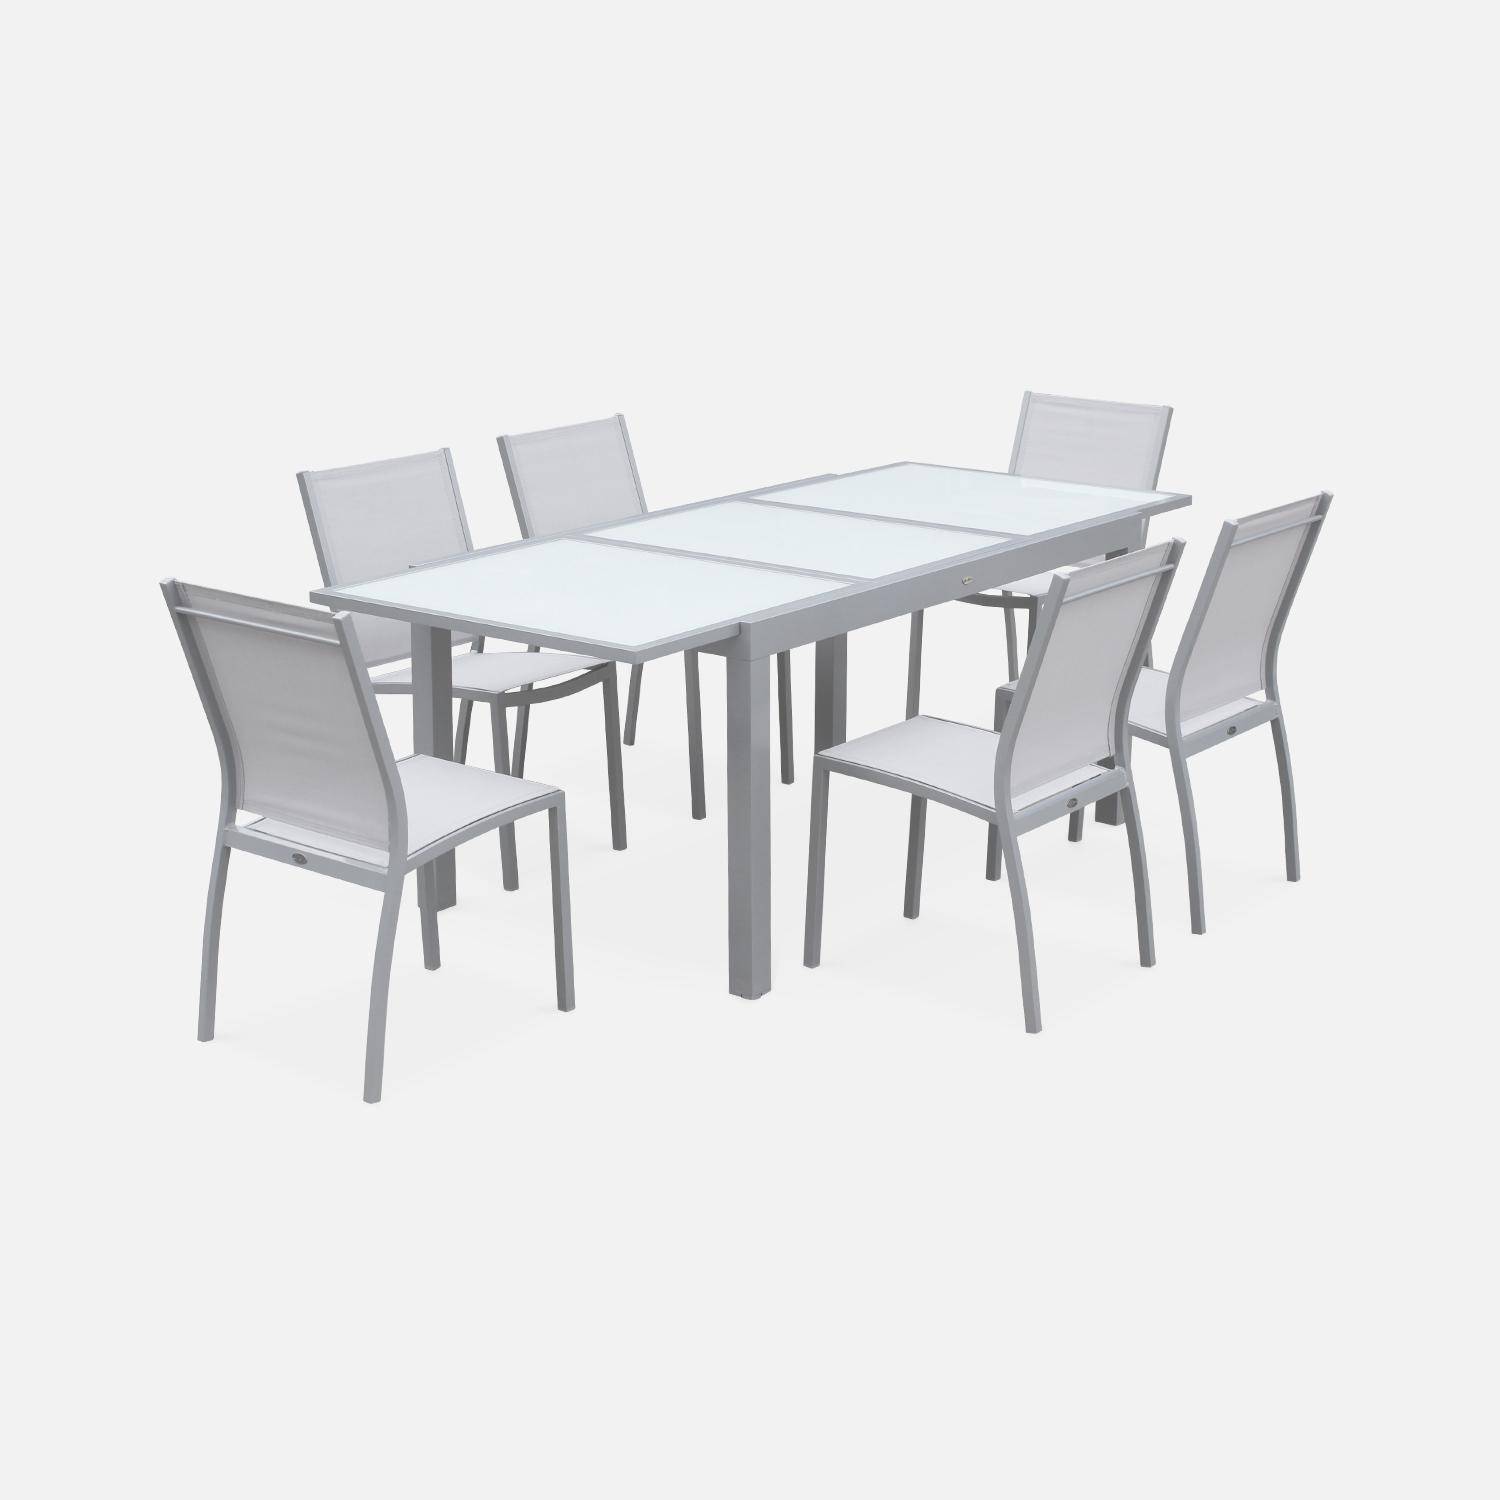 2er Set Gartenstühle - ORLANDO Farbe Grau / Hellgrau - Gestell aus Aluminum, Sitz aus Textilene, stapelbar Photo2